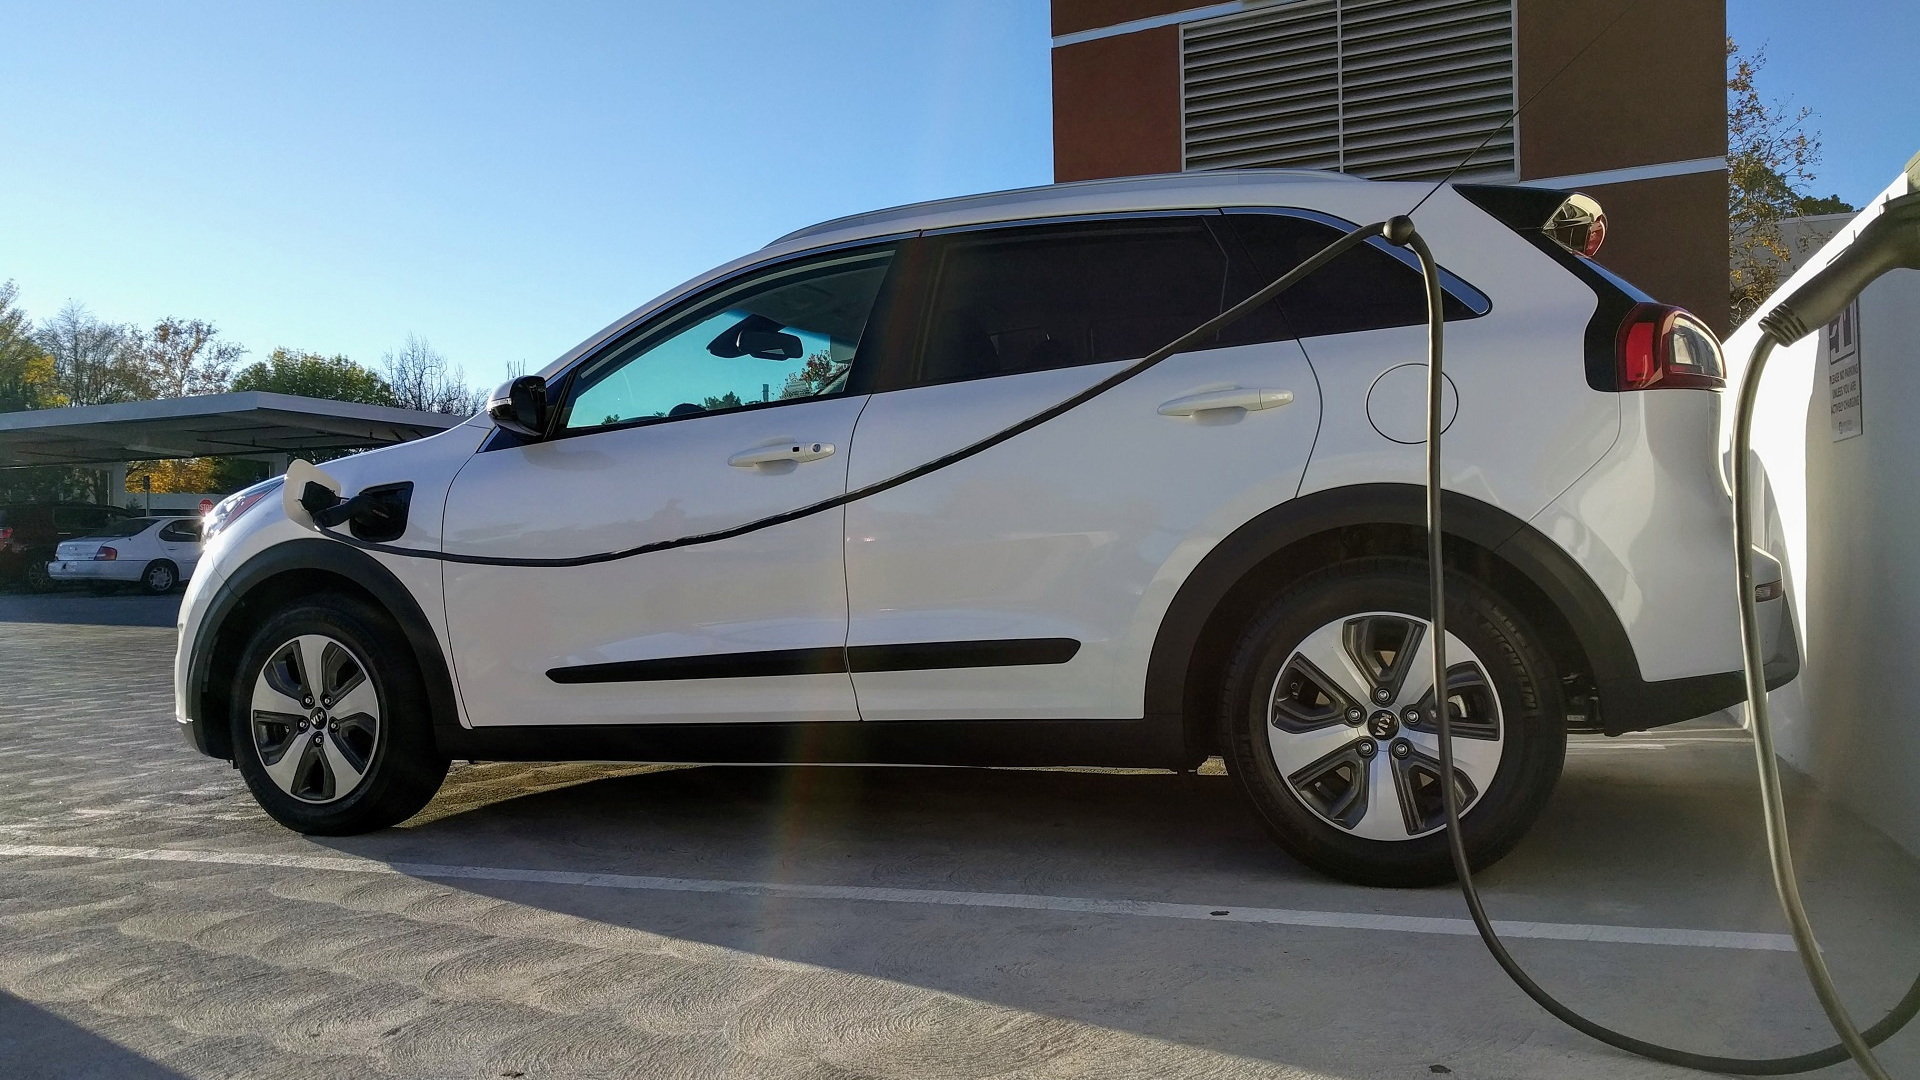 2018 Kia Niro Plug-In Hybrid charging at Mayo Newhall Hospital, Santa Clarita, California, Dec 2017